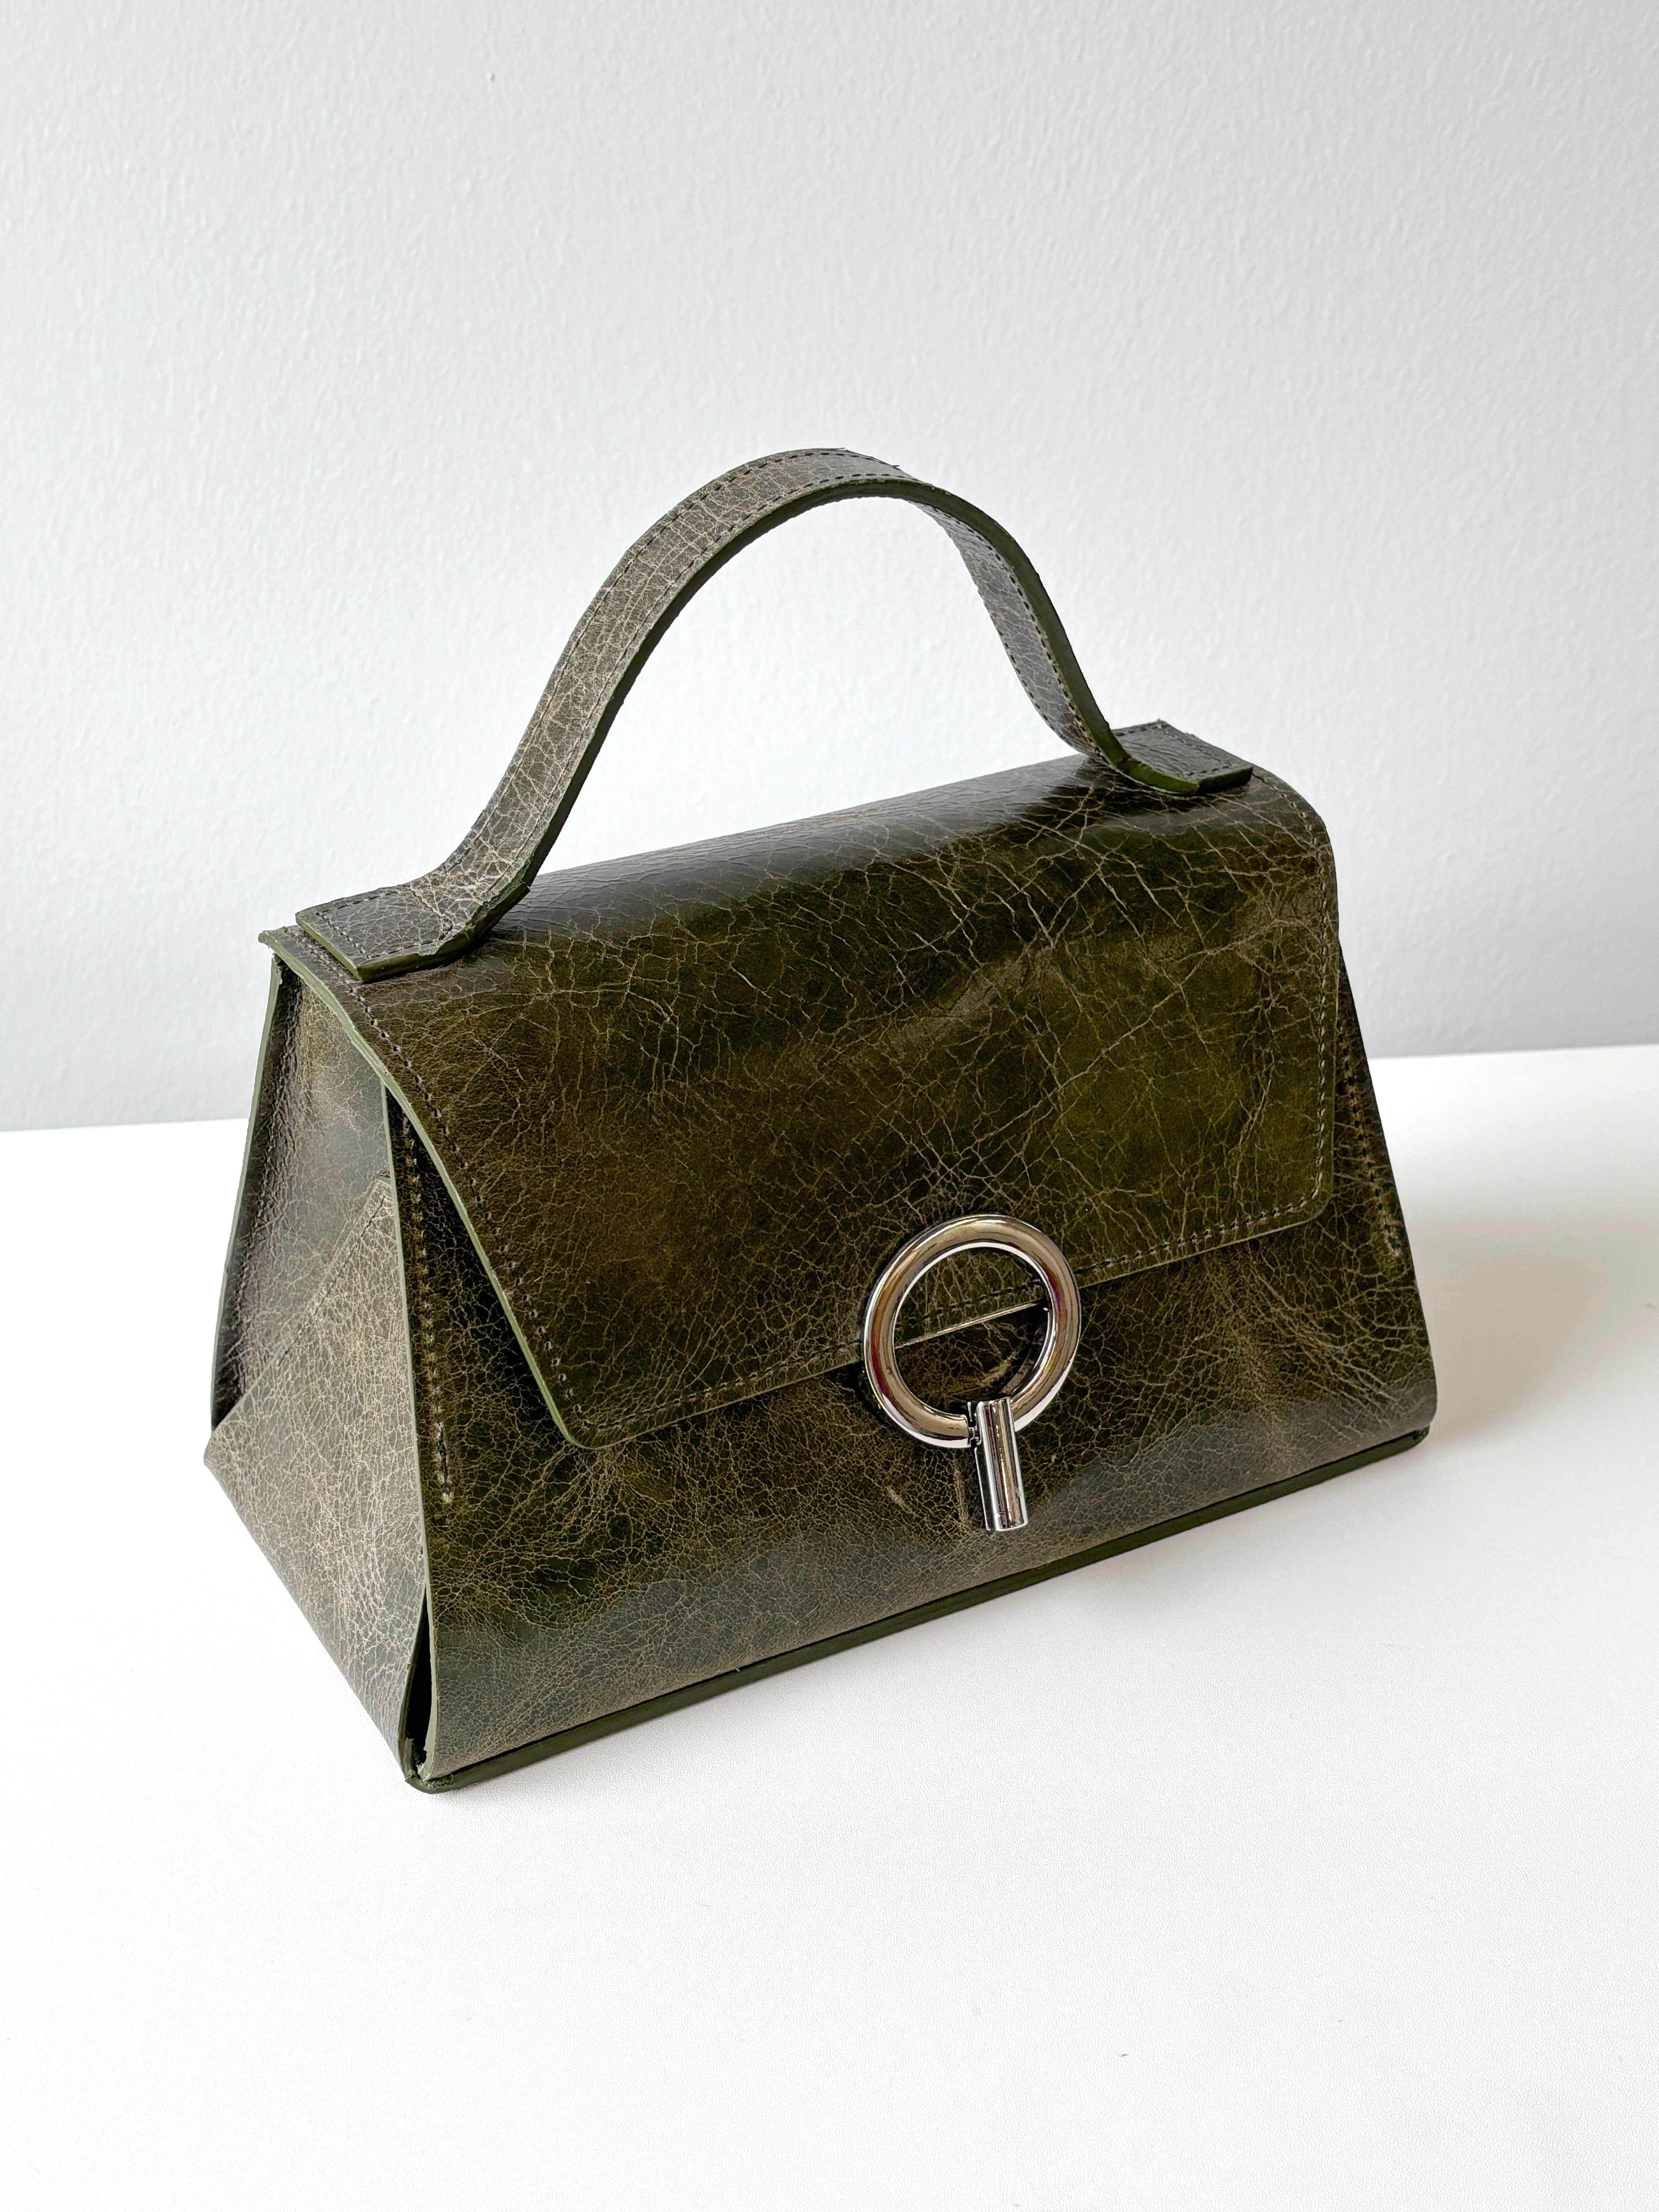 Studyus Ring Handbag in green